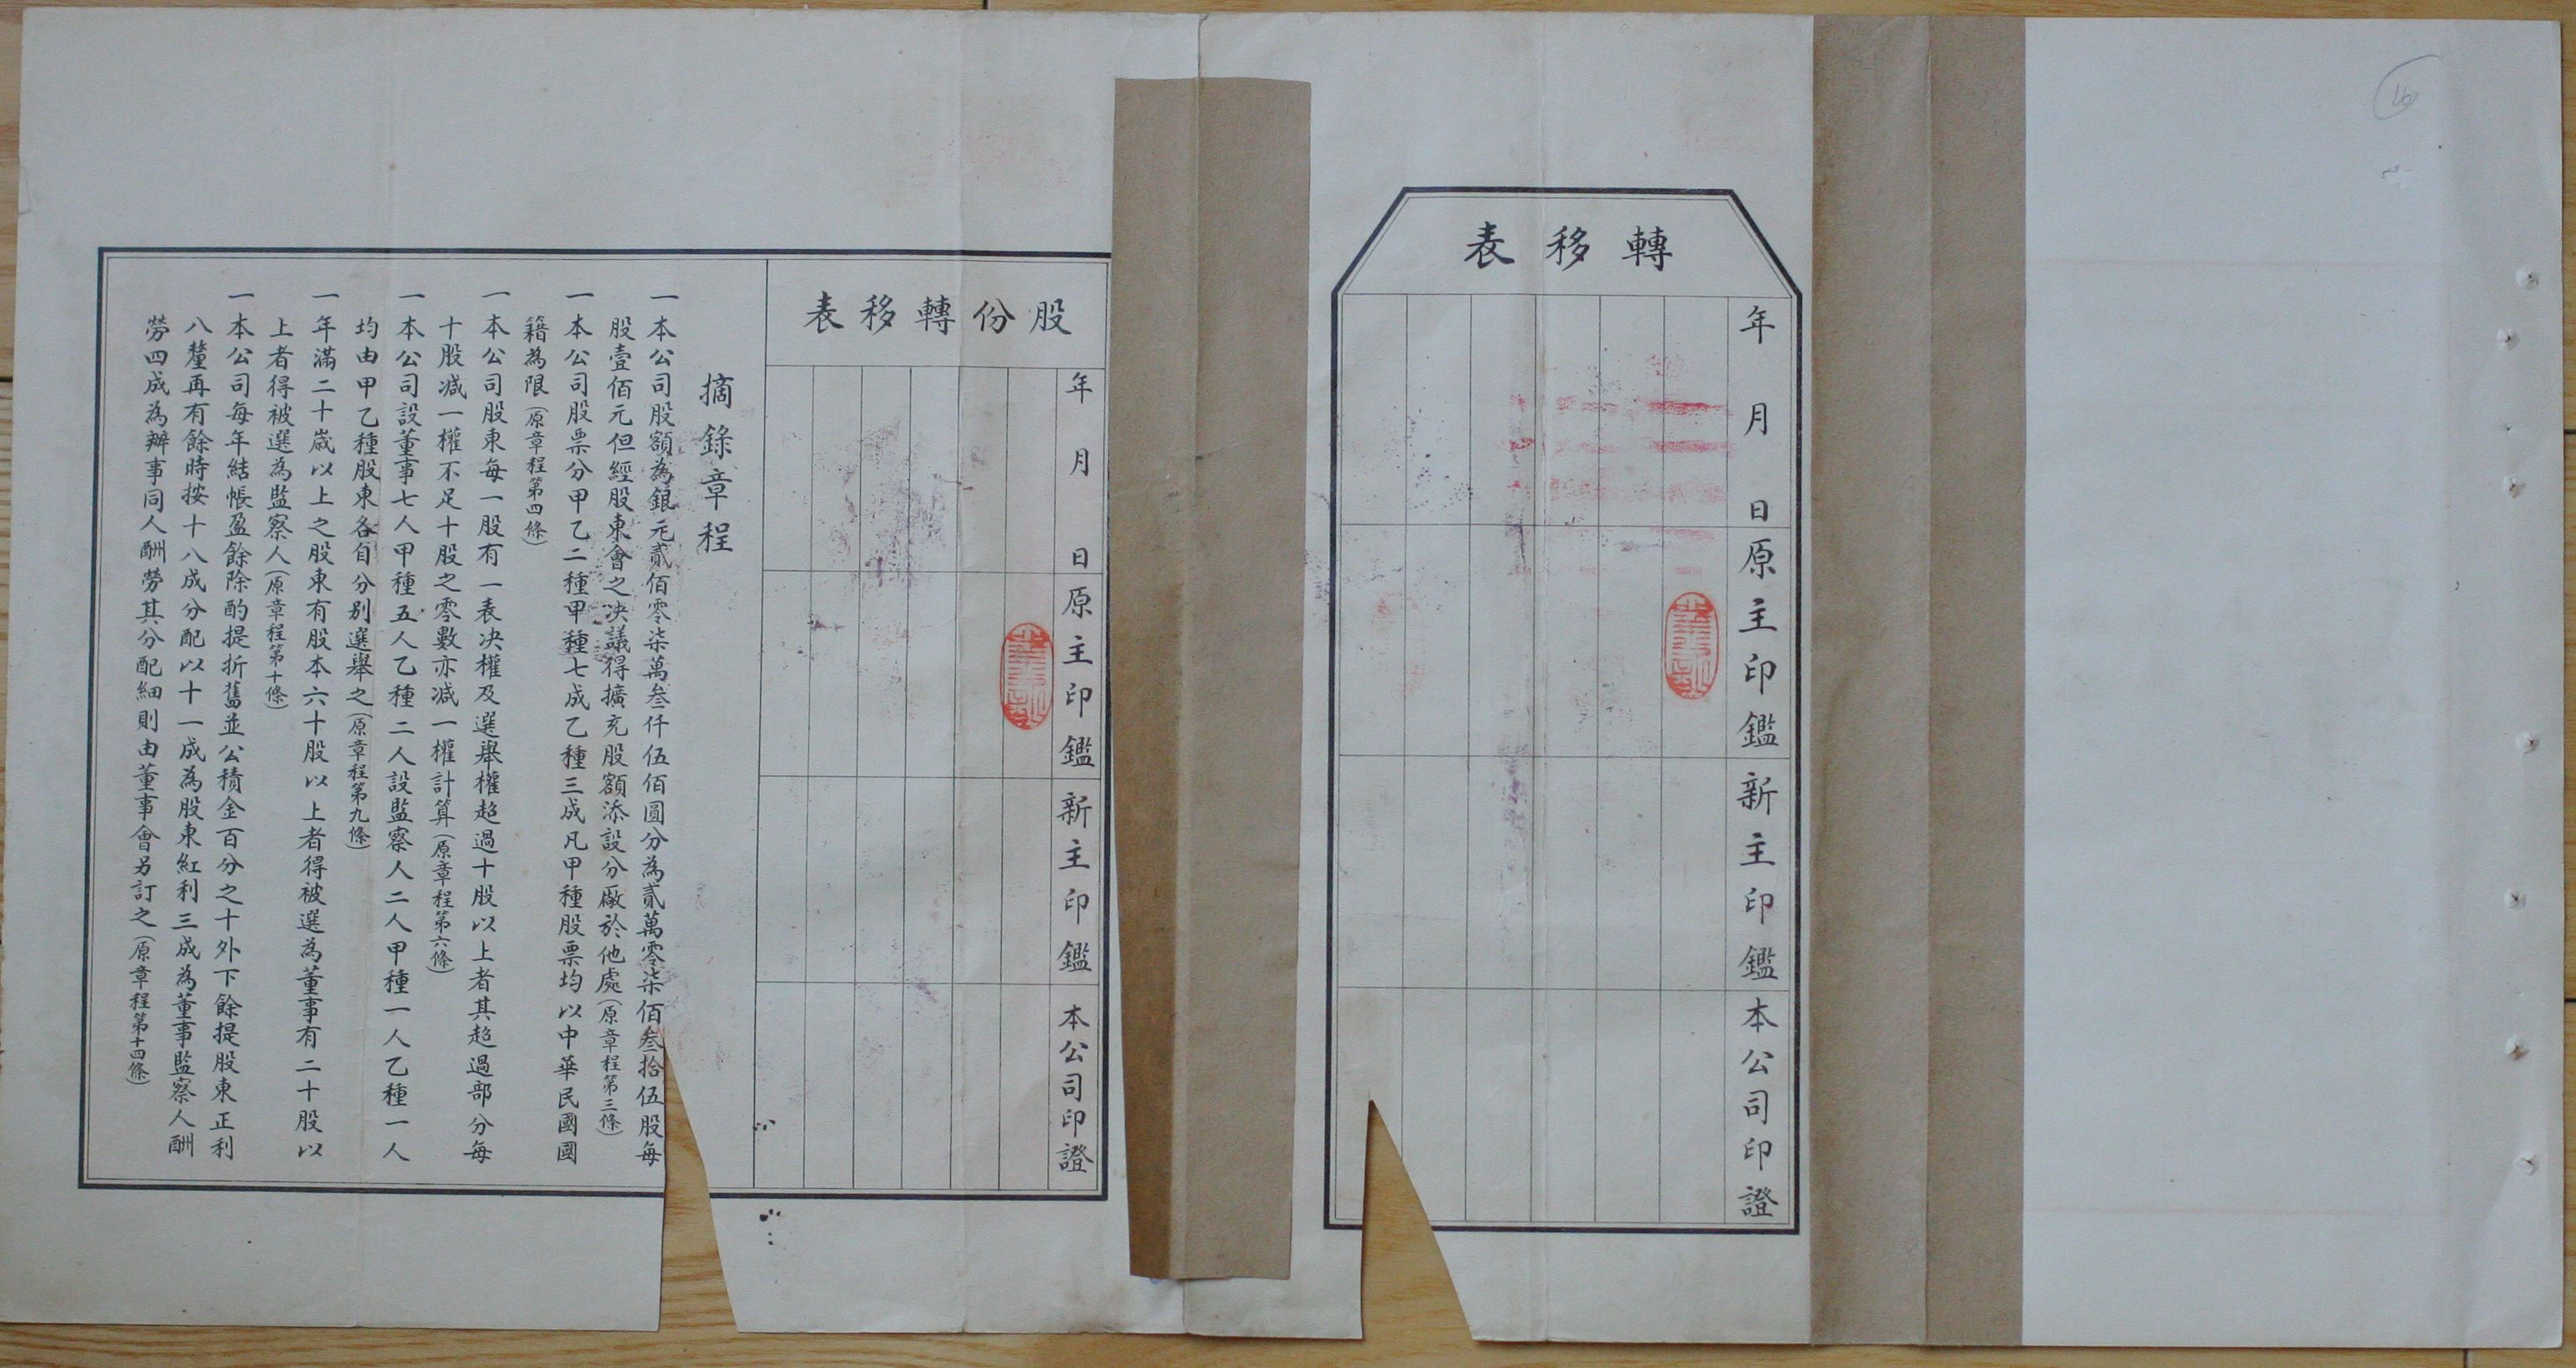 S0130, Weihui Hua-Xin Textile Co. Ltd, Stock 3 Shares, China 1933